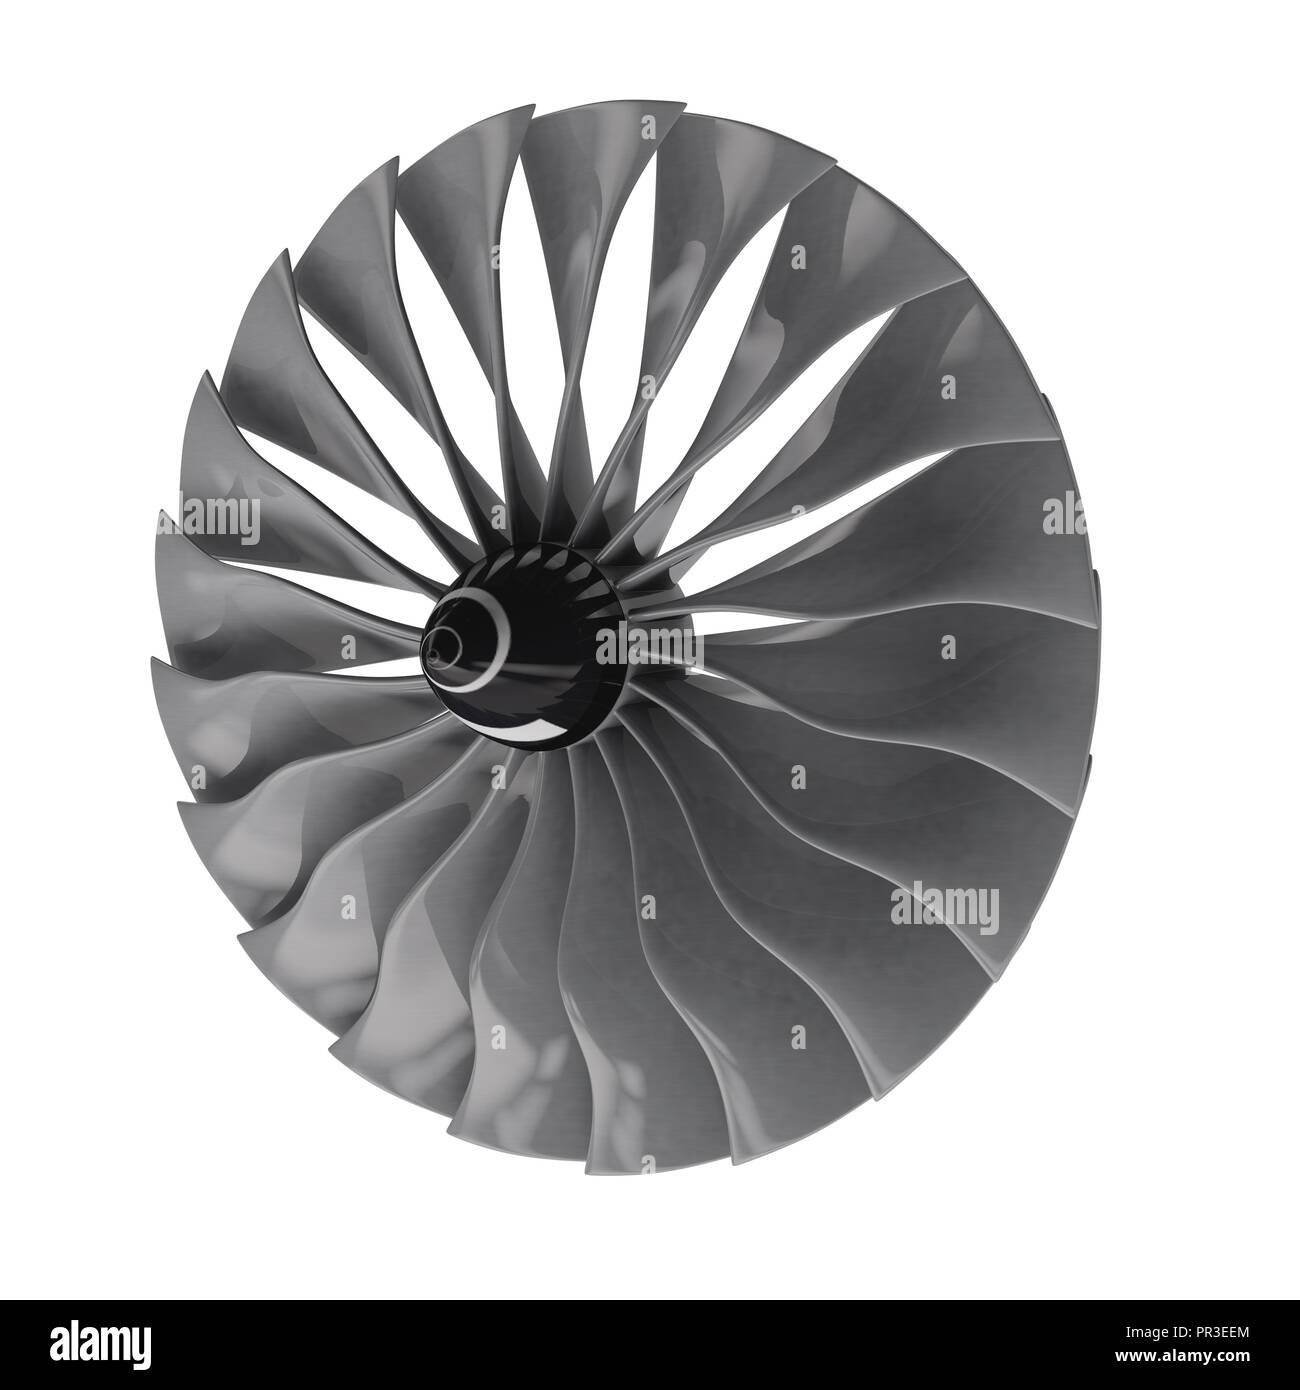 Jet engine, turbine blades of airplane, 3drender. Isolated on white Stock Photo